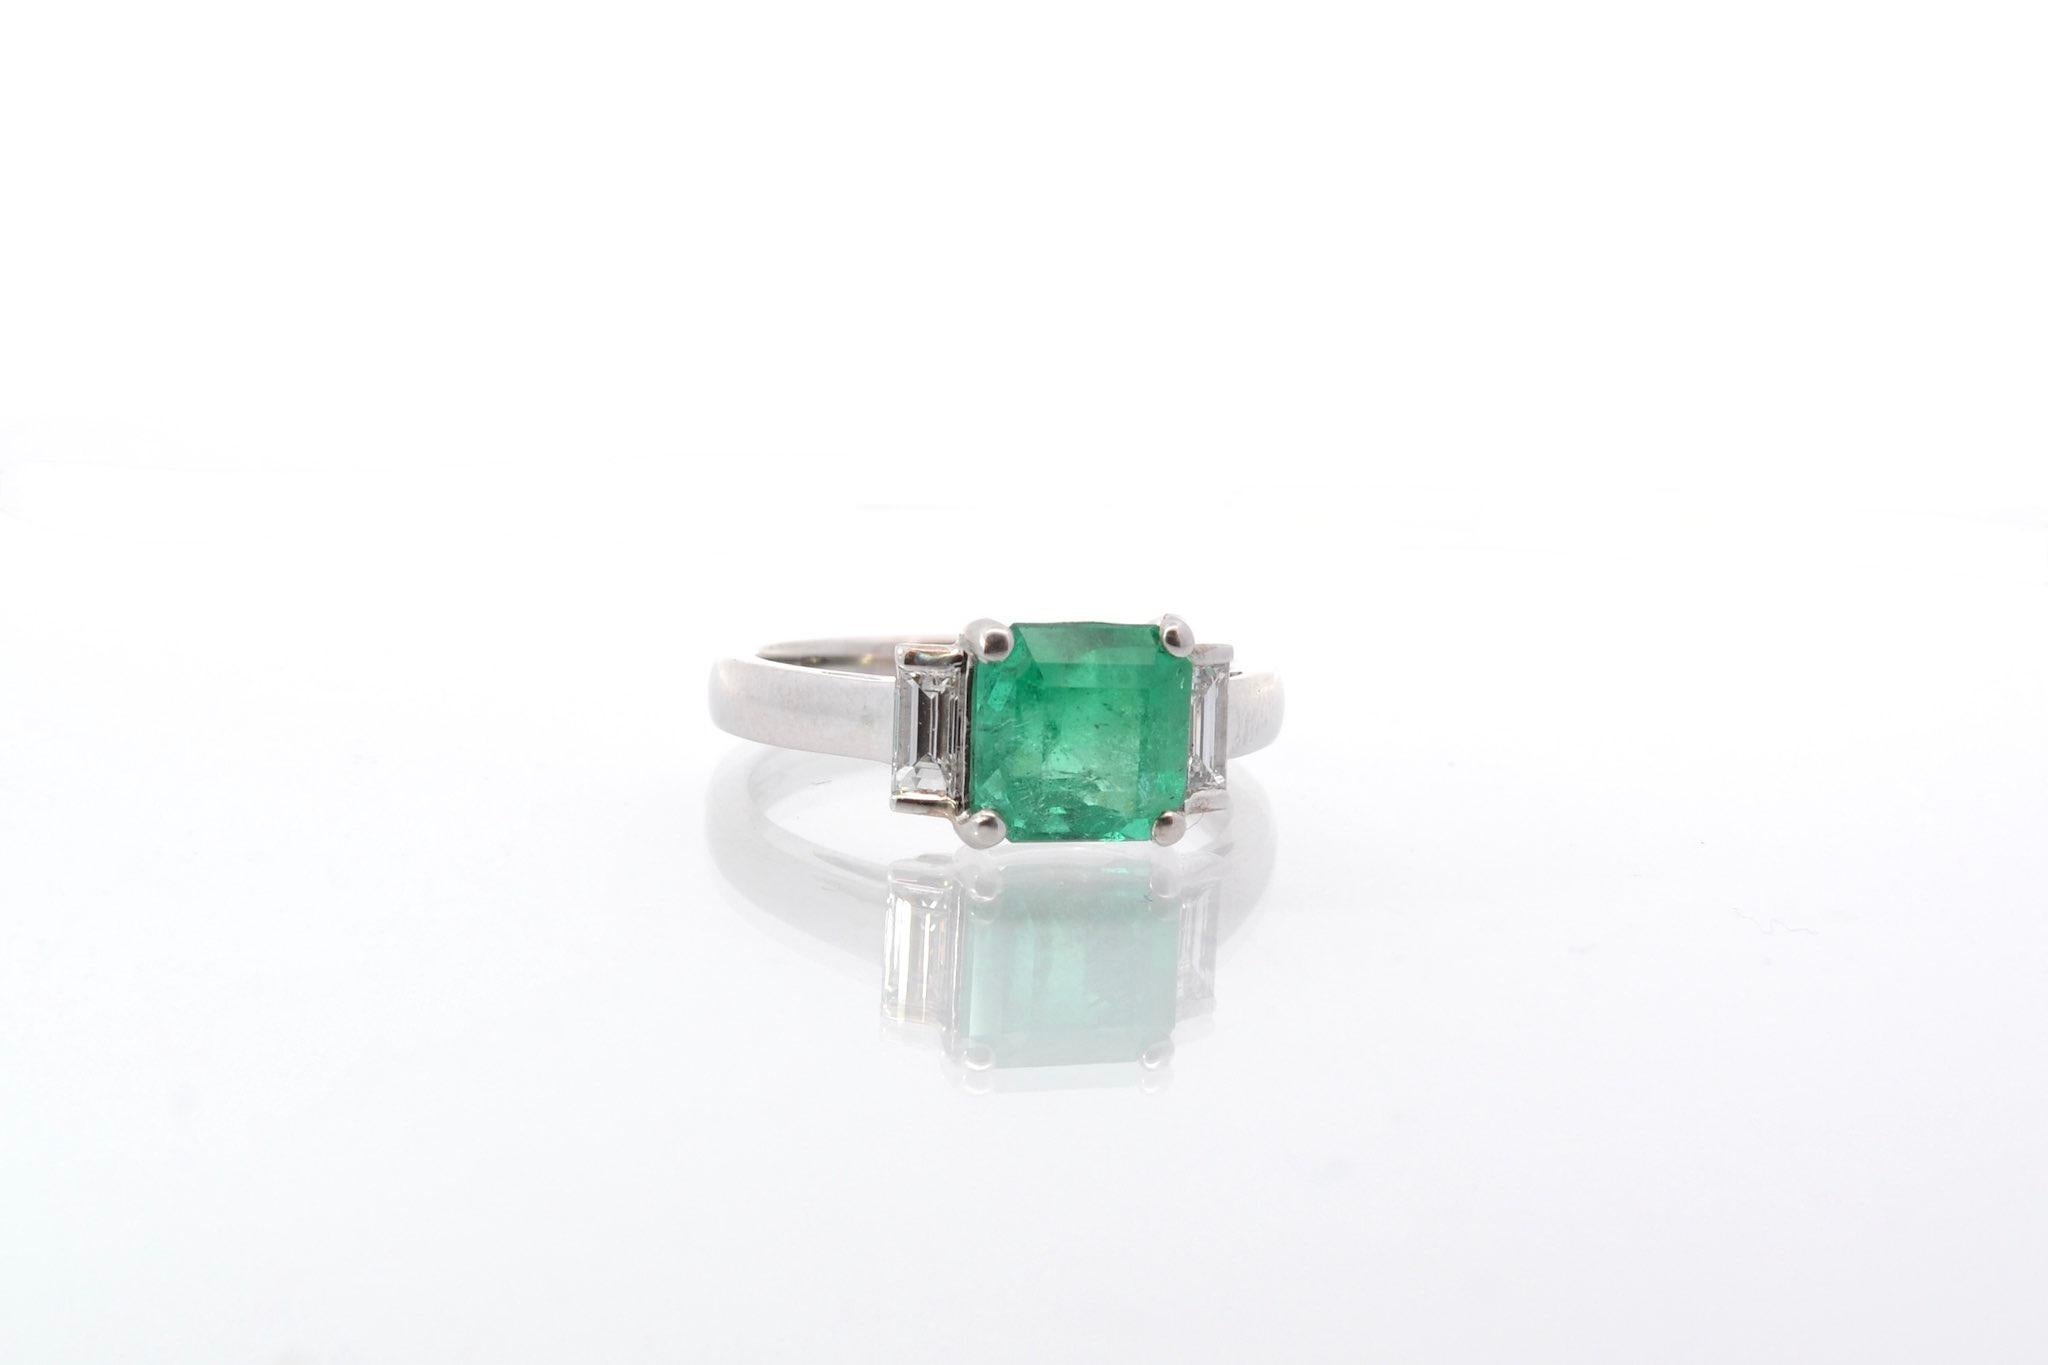 Emerald Cut Emerald and baguettes diamonds ring in 18k gold